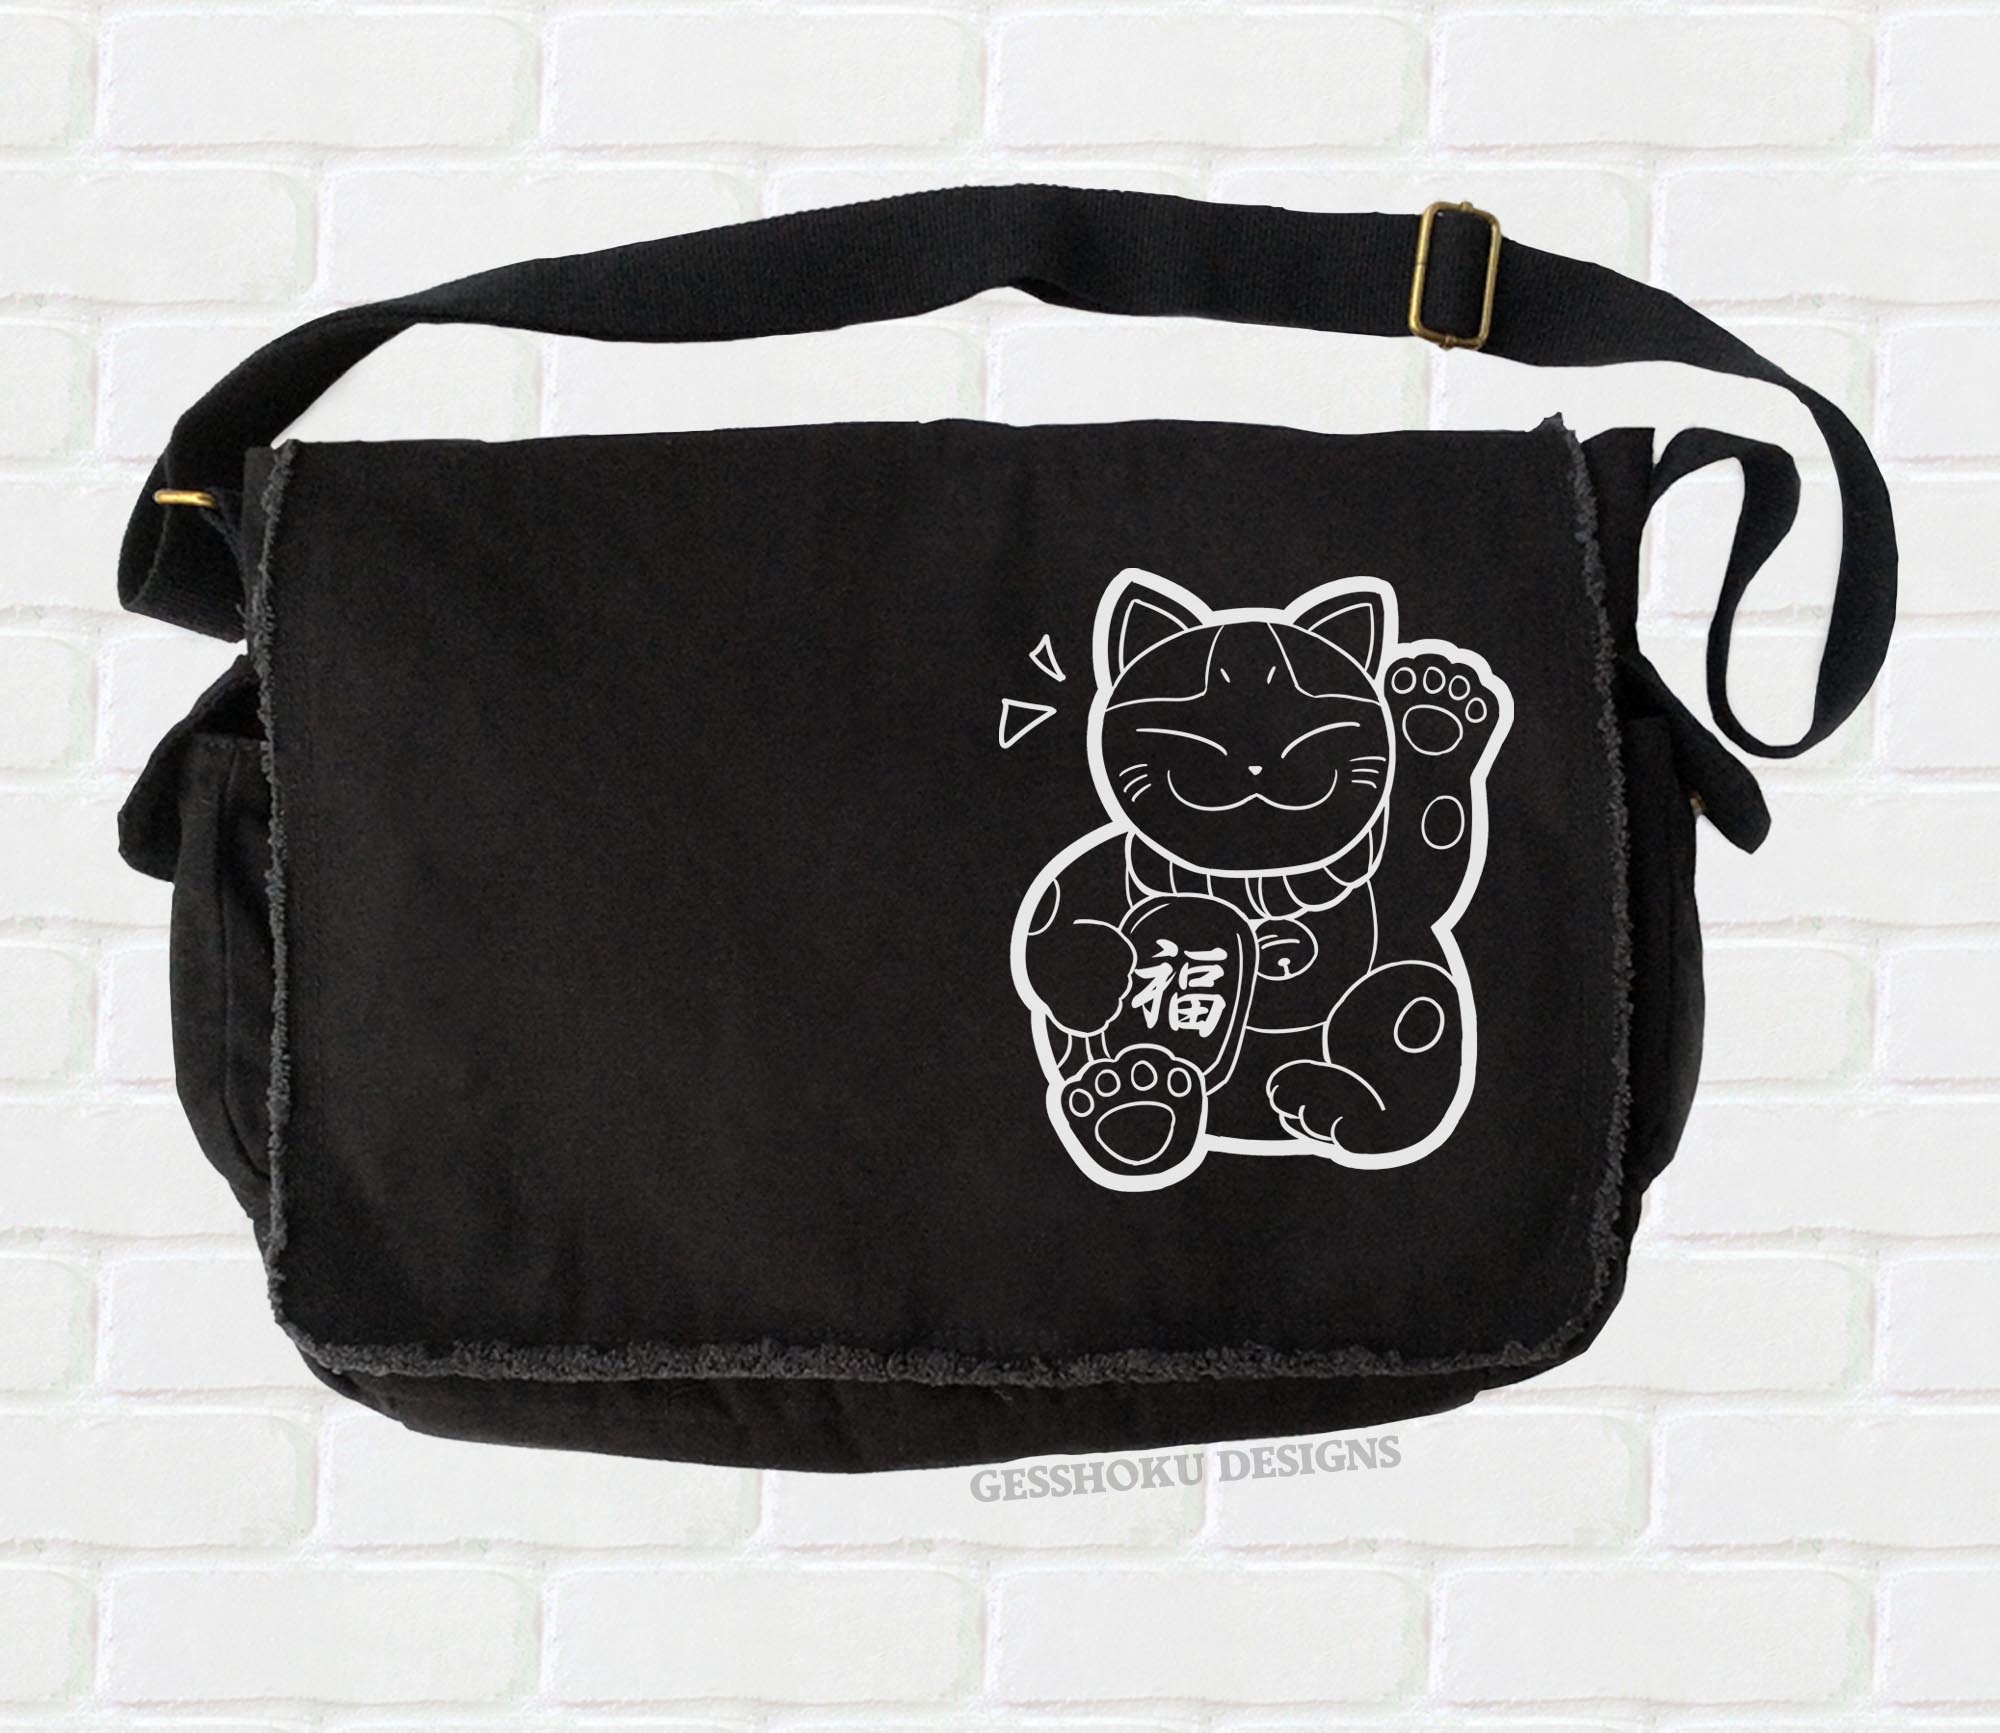 Maneki Neko Messenger Bag - Black